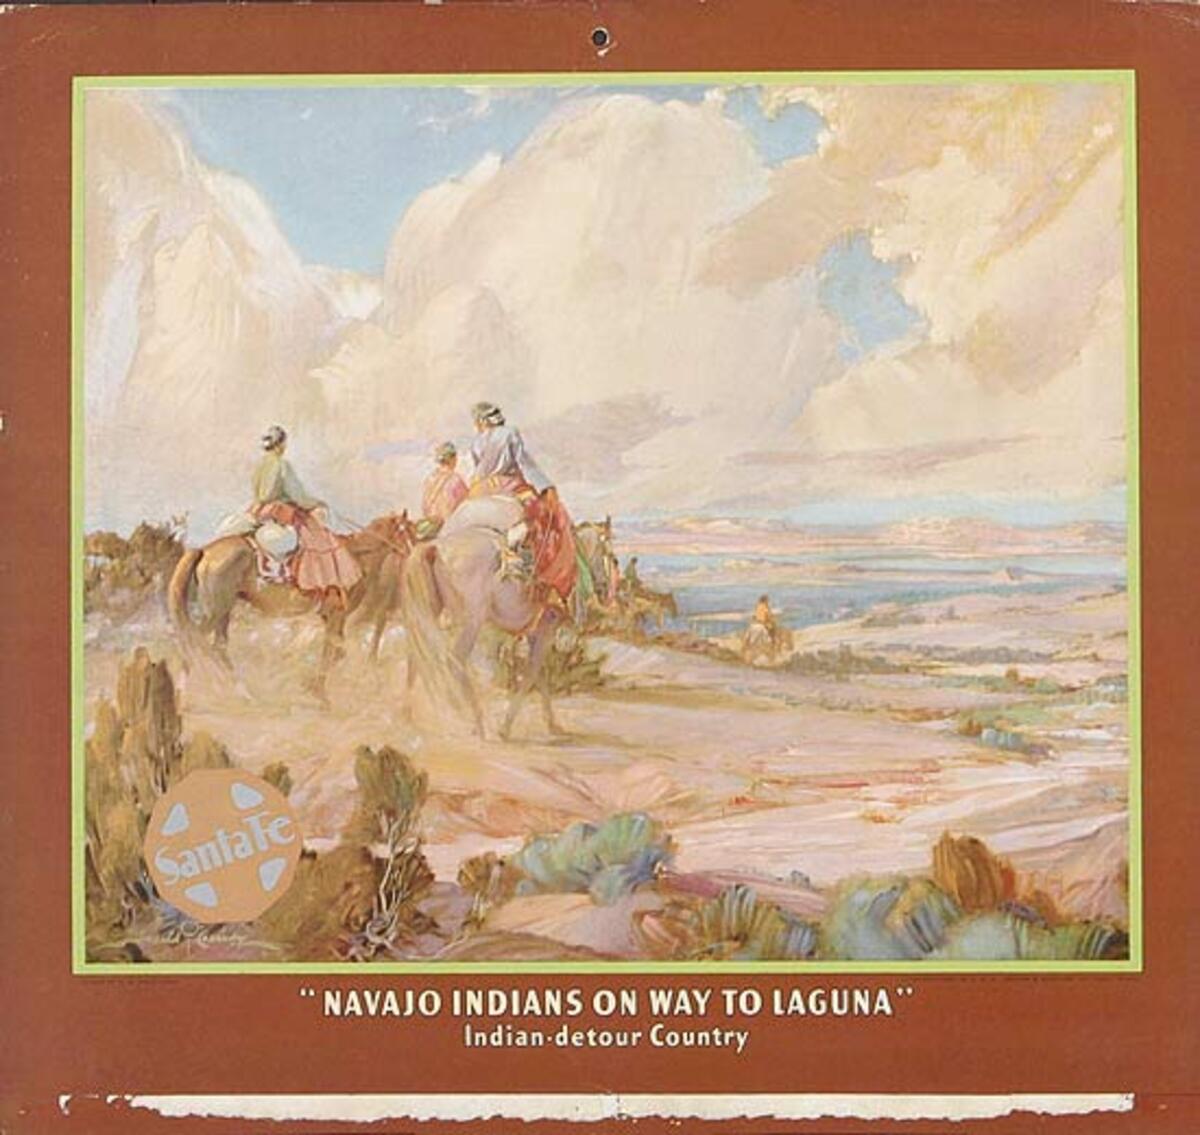 Navajo Indians on Way to Laguna Indian-detour Country Original Santa Fe Railroad Advertising Calendar